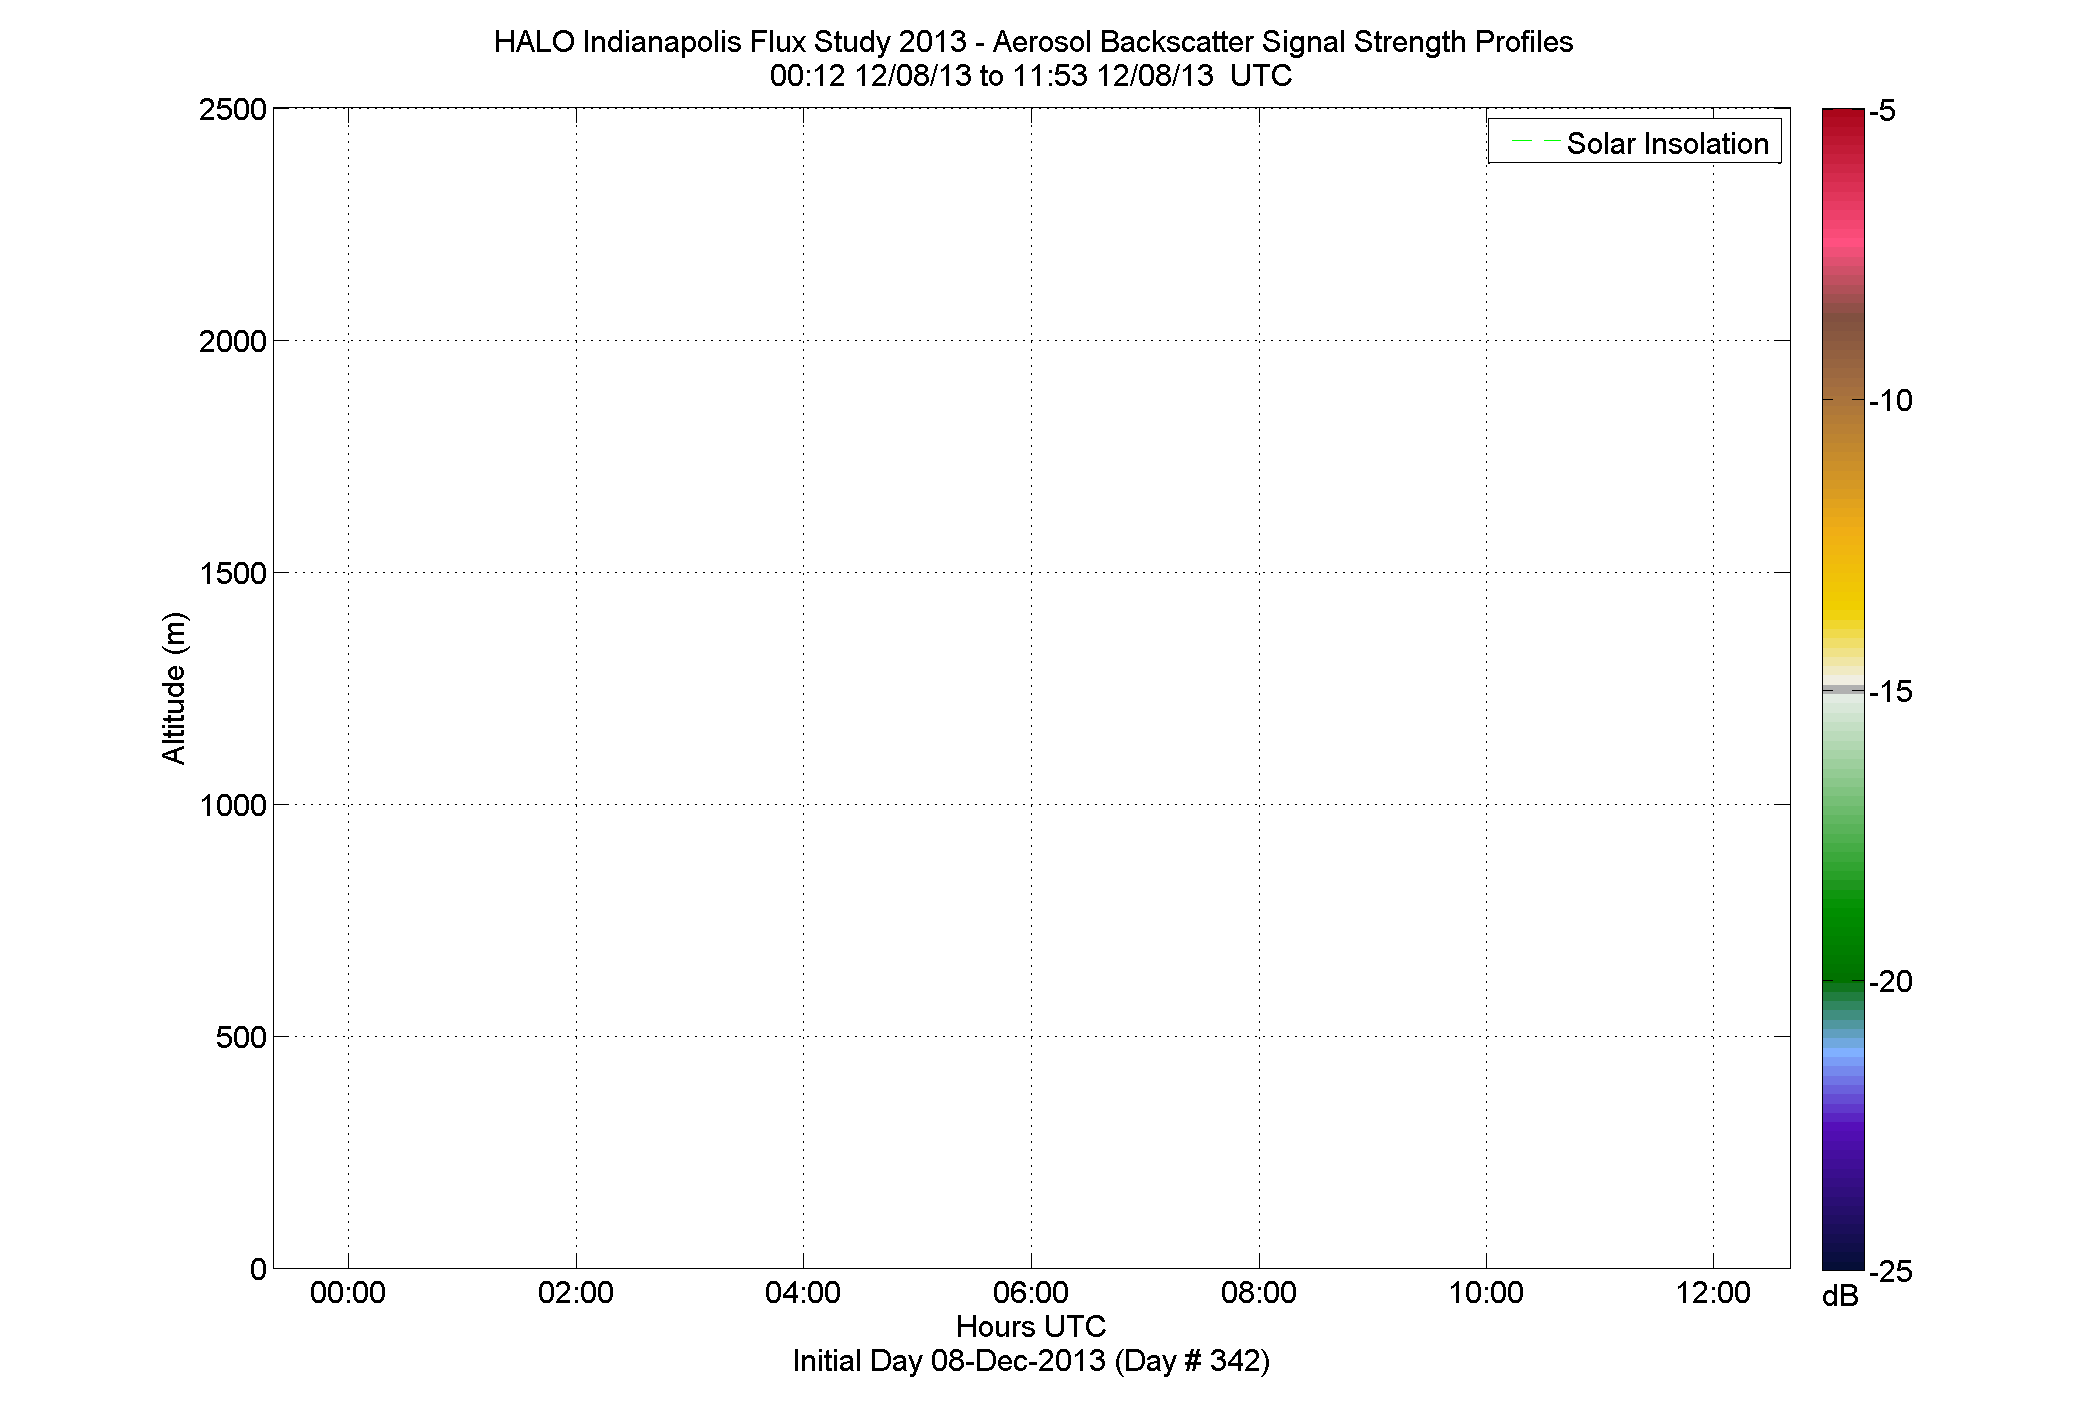 HALO aerosol backscatter signal strength profile - December 8 am